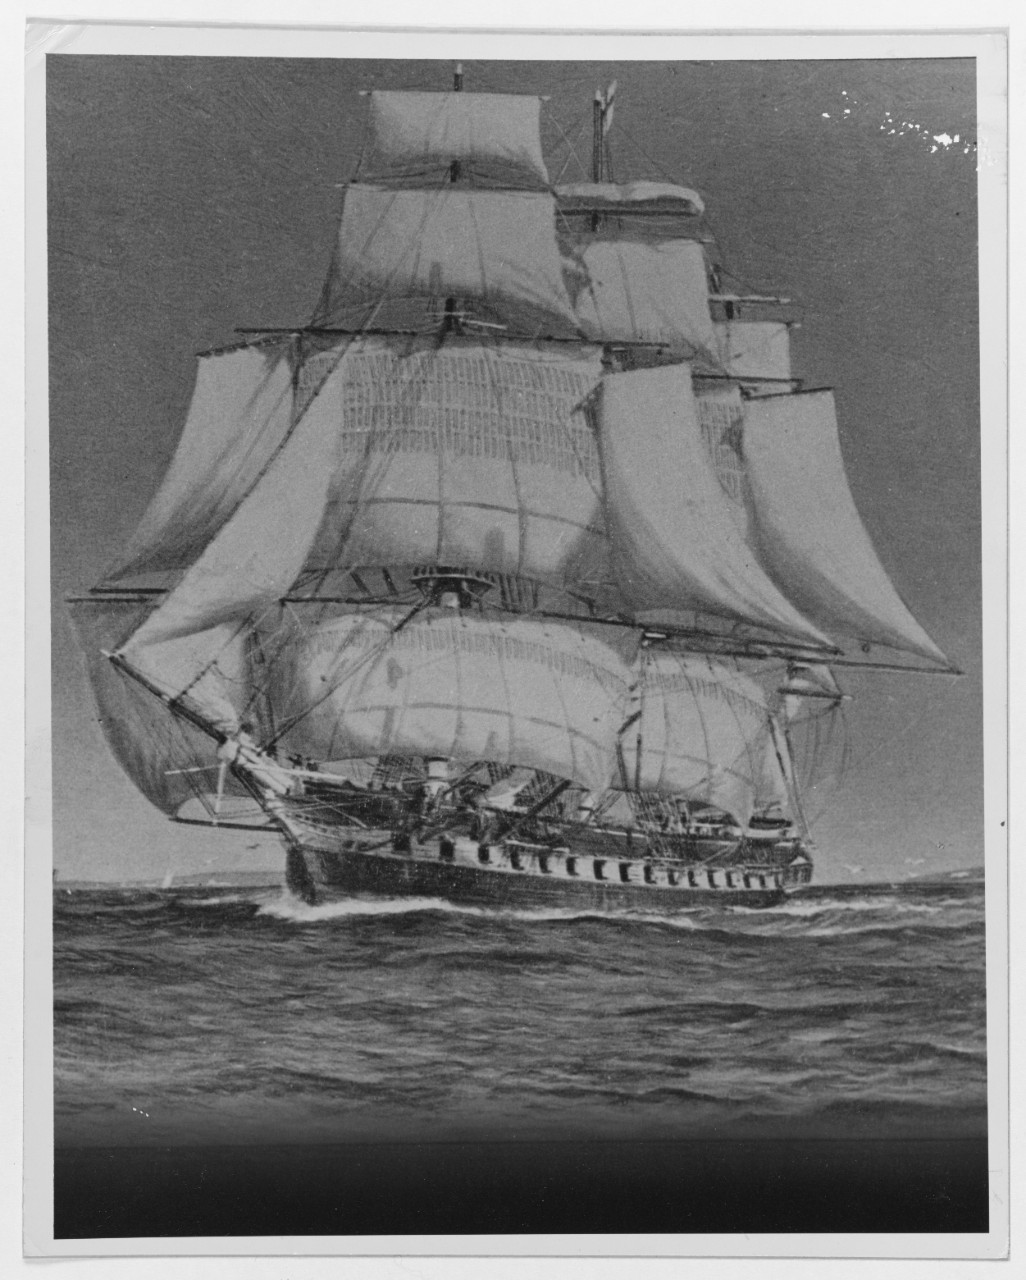 Frigate under sail